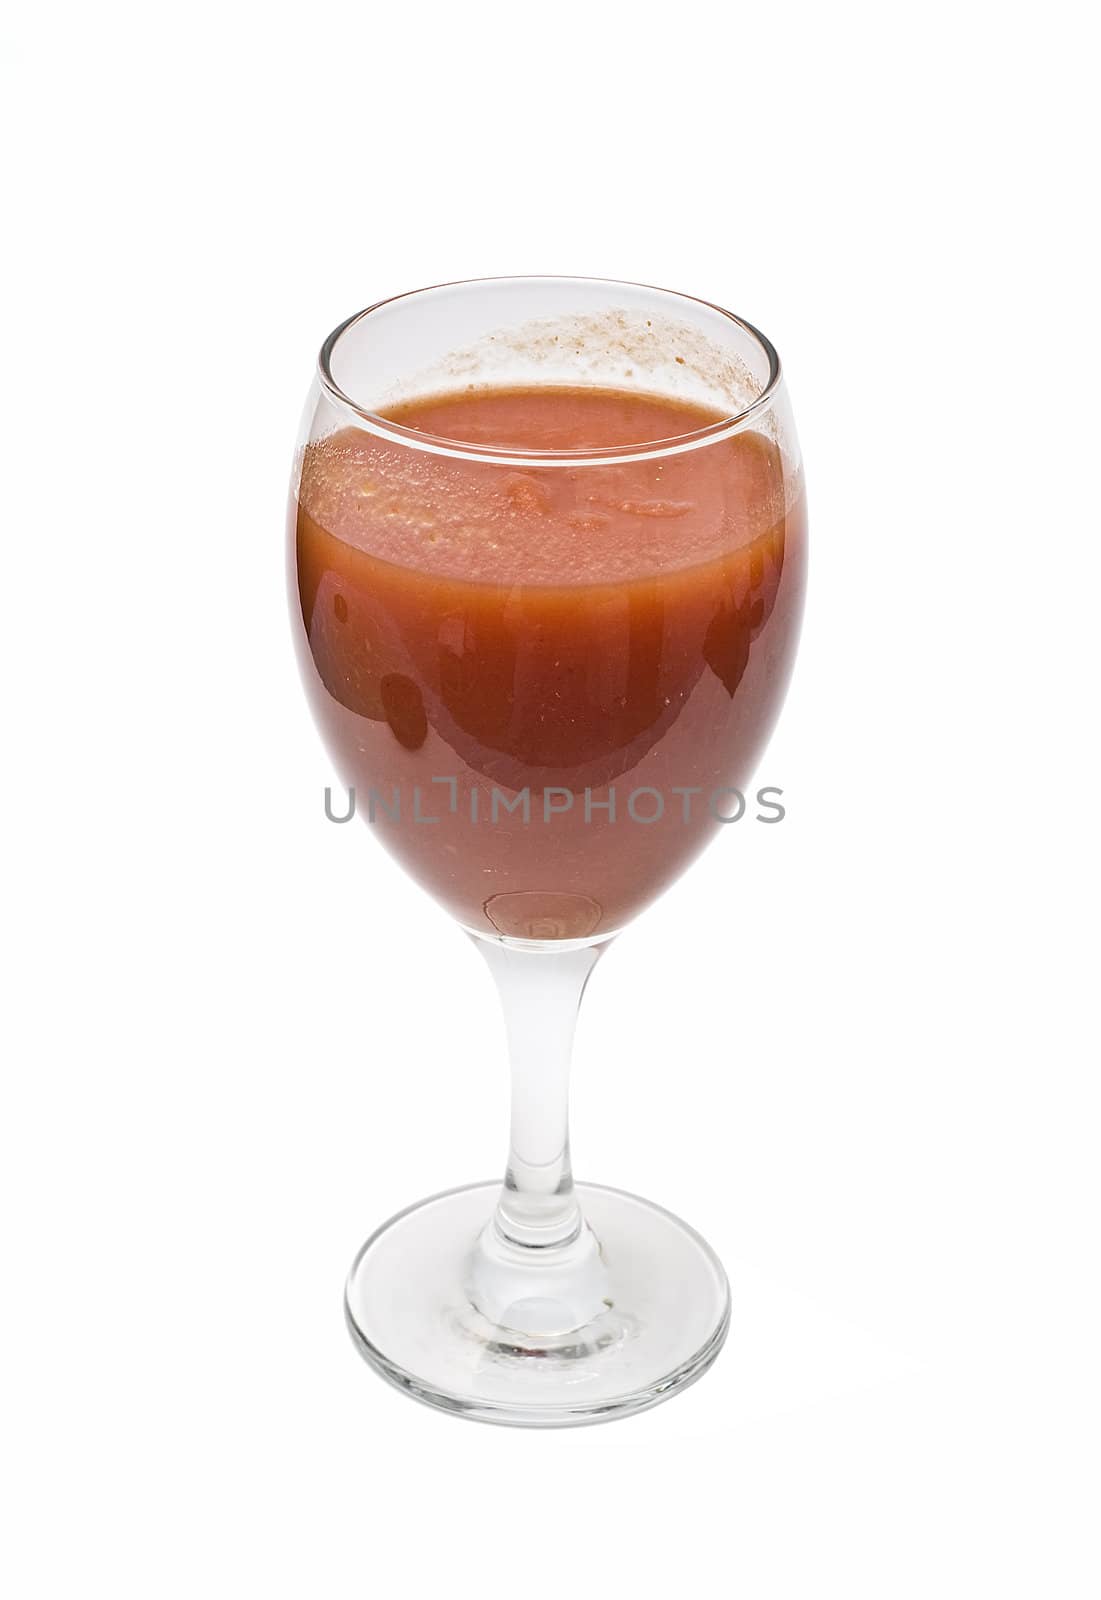 Tomato juice. by angelsimon